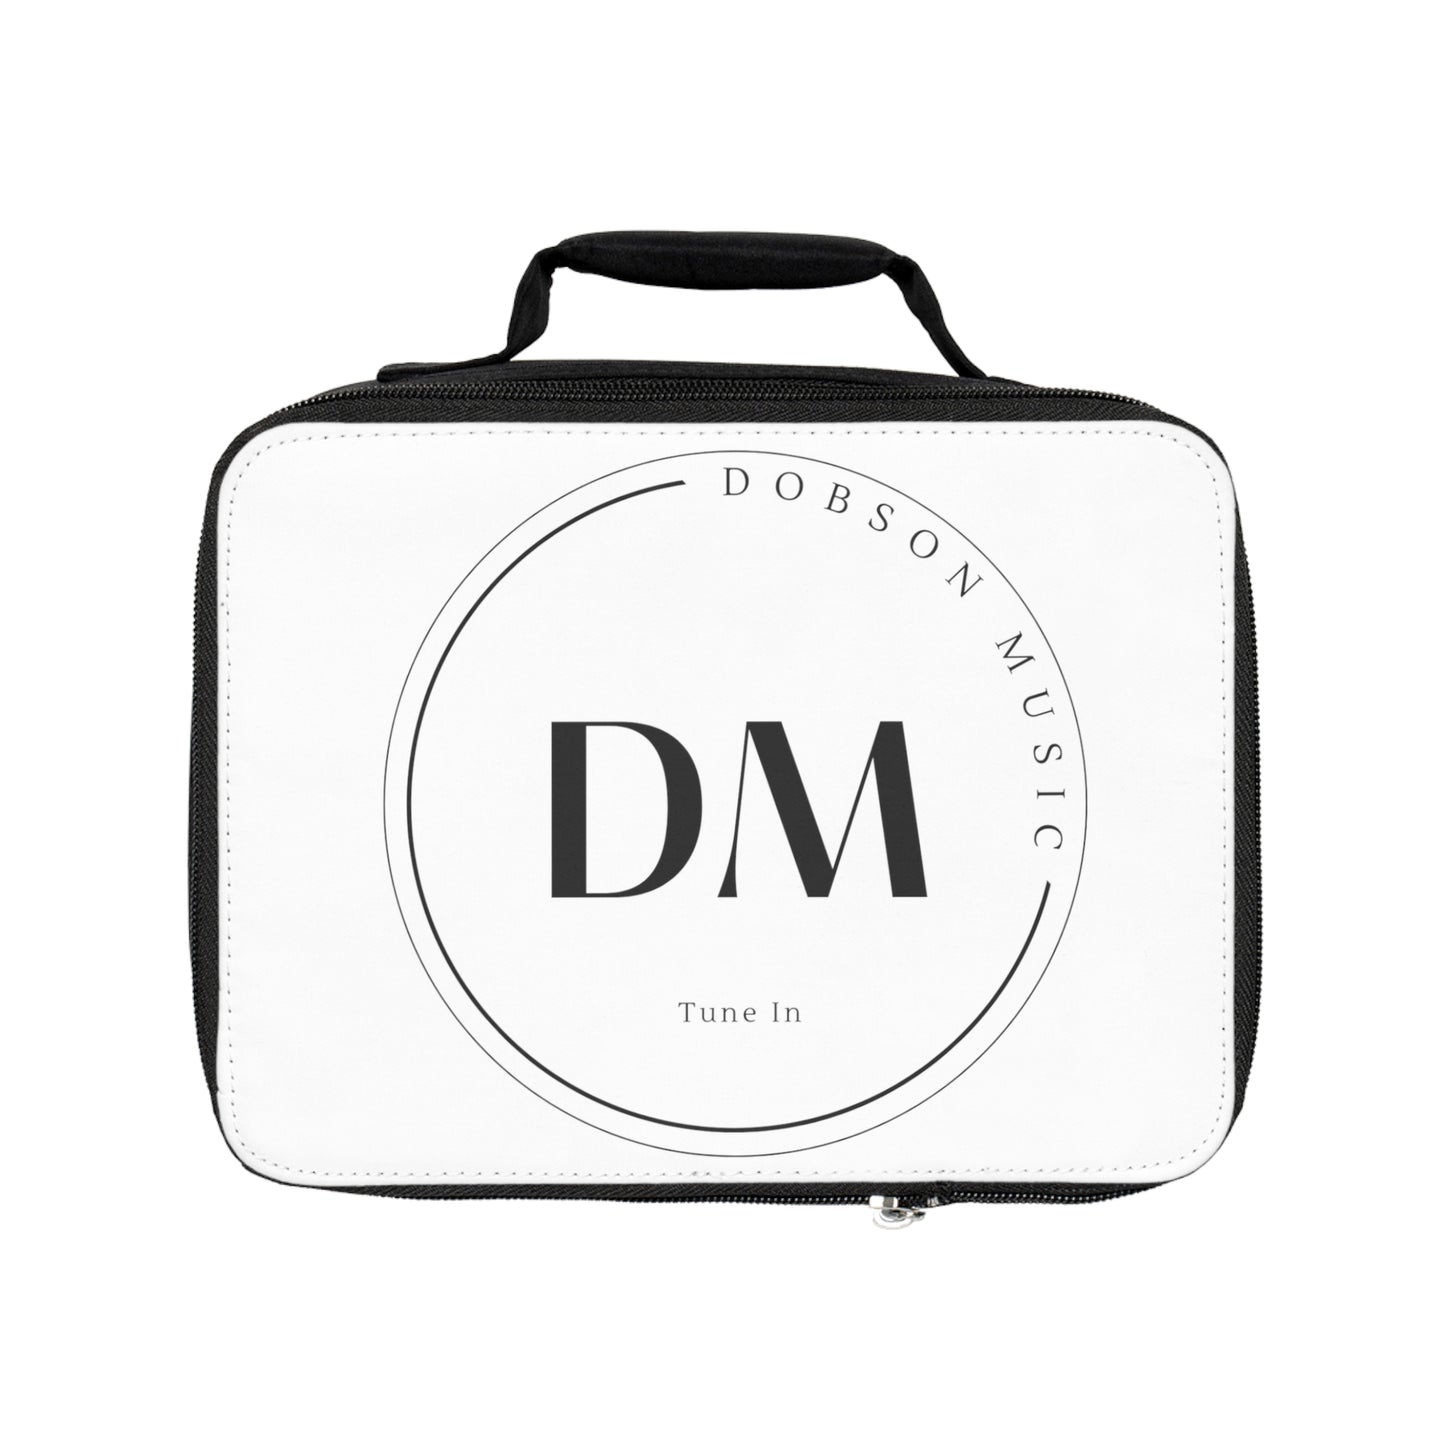 DM - Lunch Bag